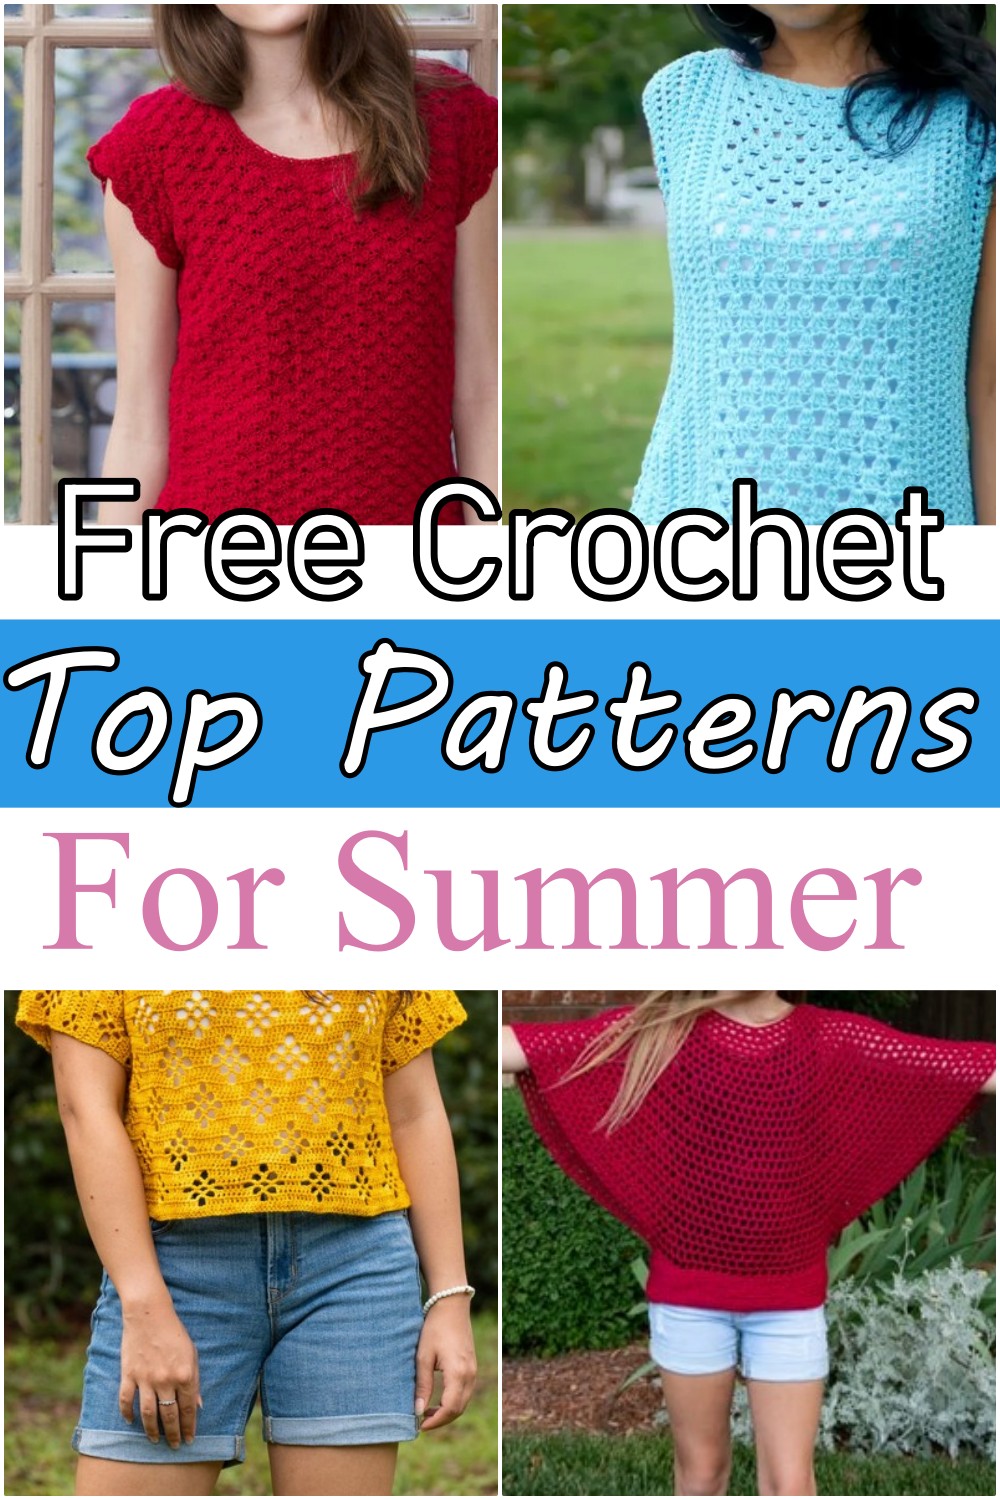 Crochet Top Patterns For Summer